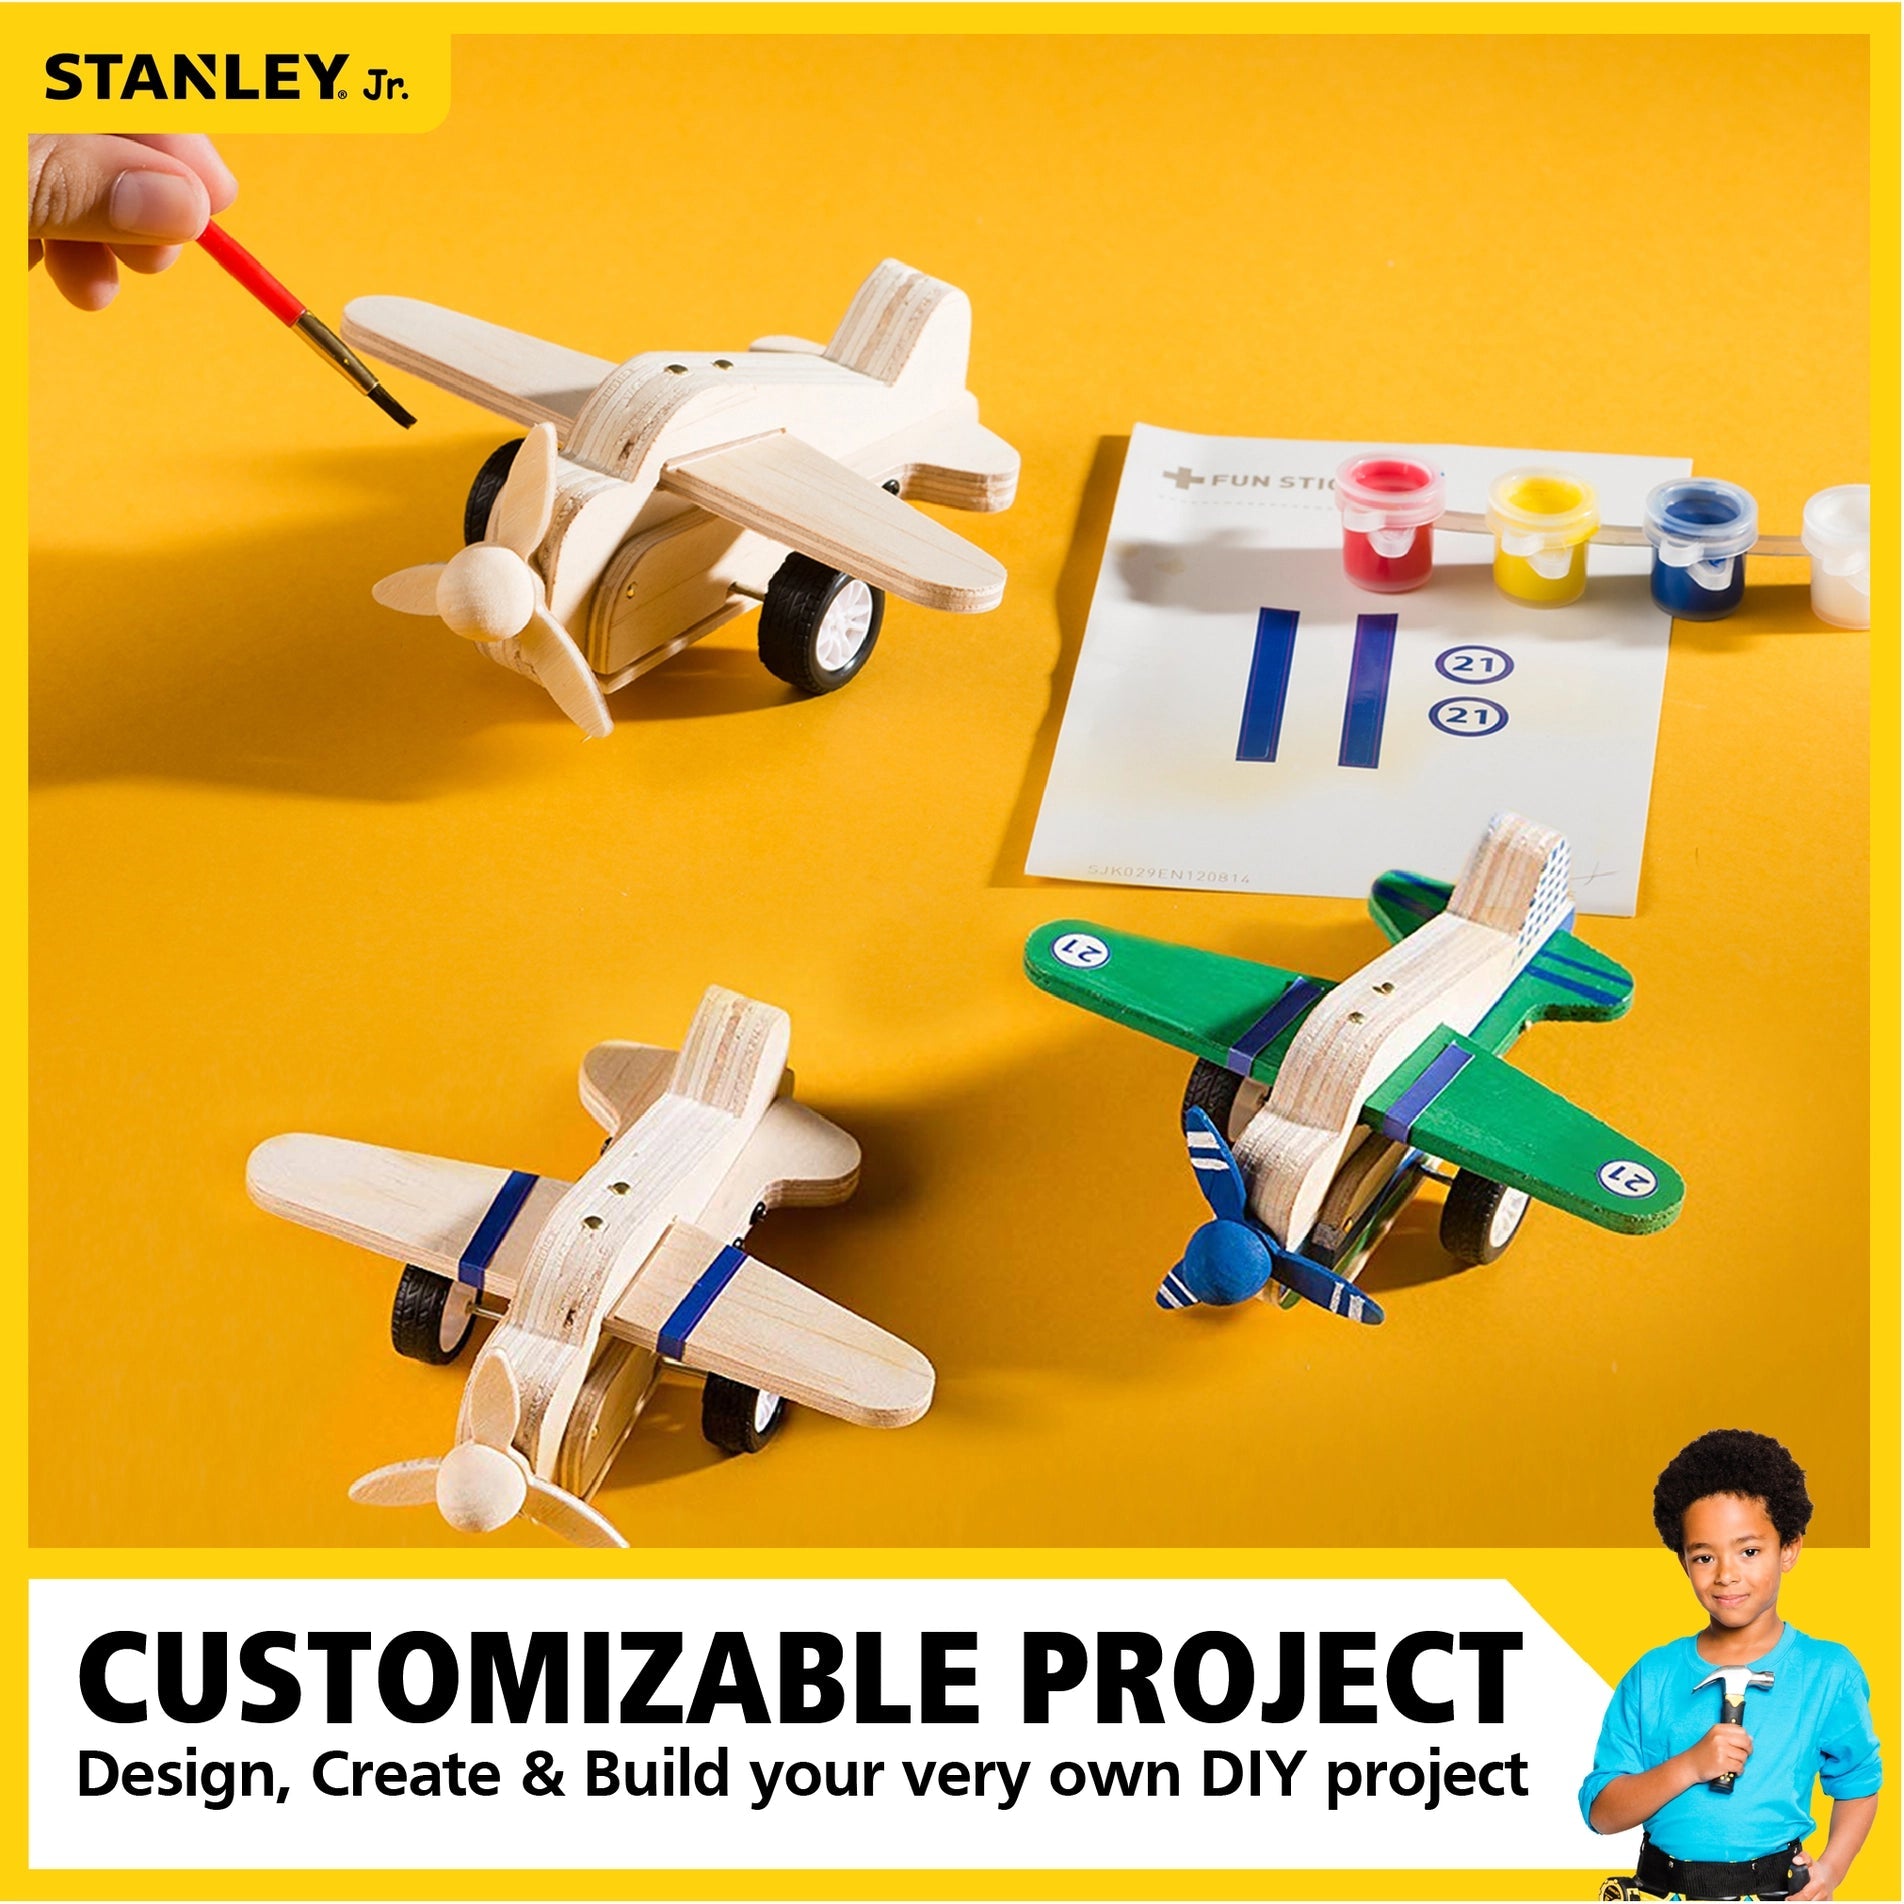 Stanley Jr. Pull-Back Airplane Kit-Red Toolbox-Little Giant Kidz